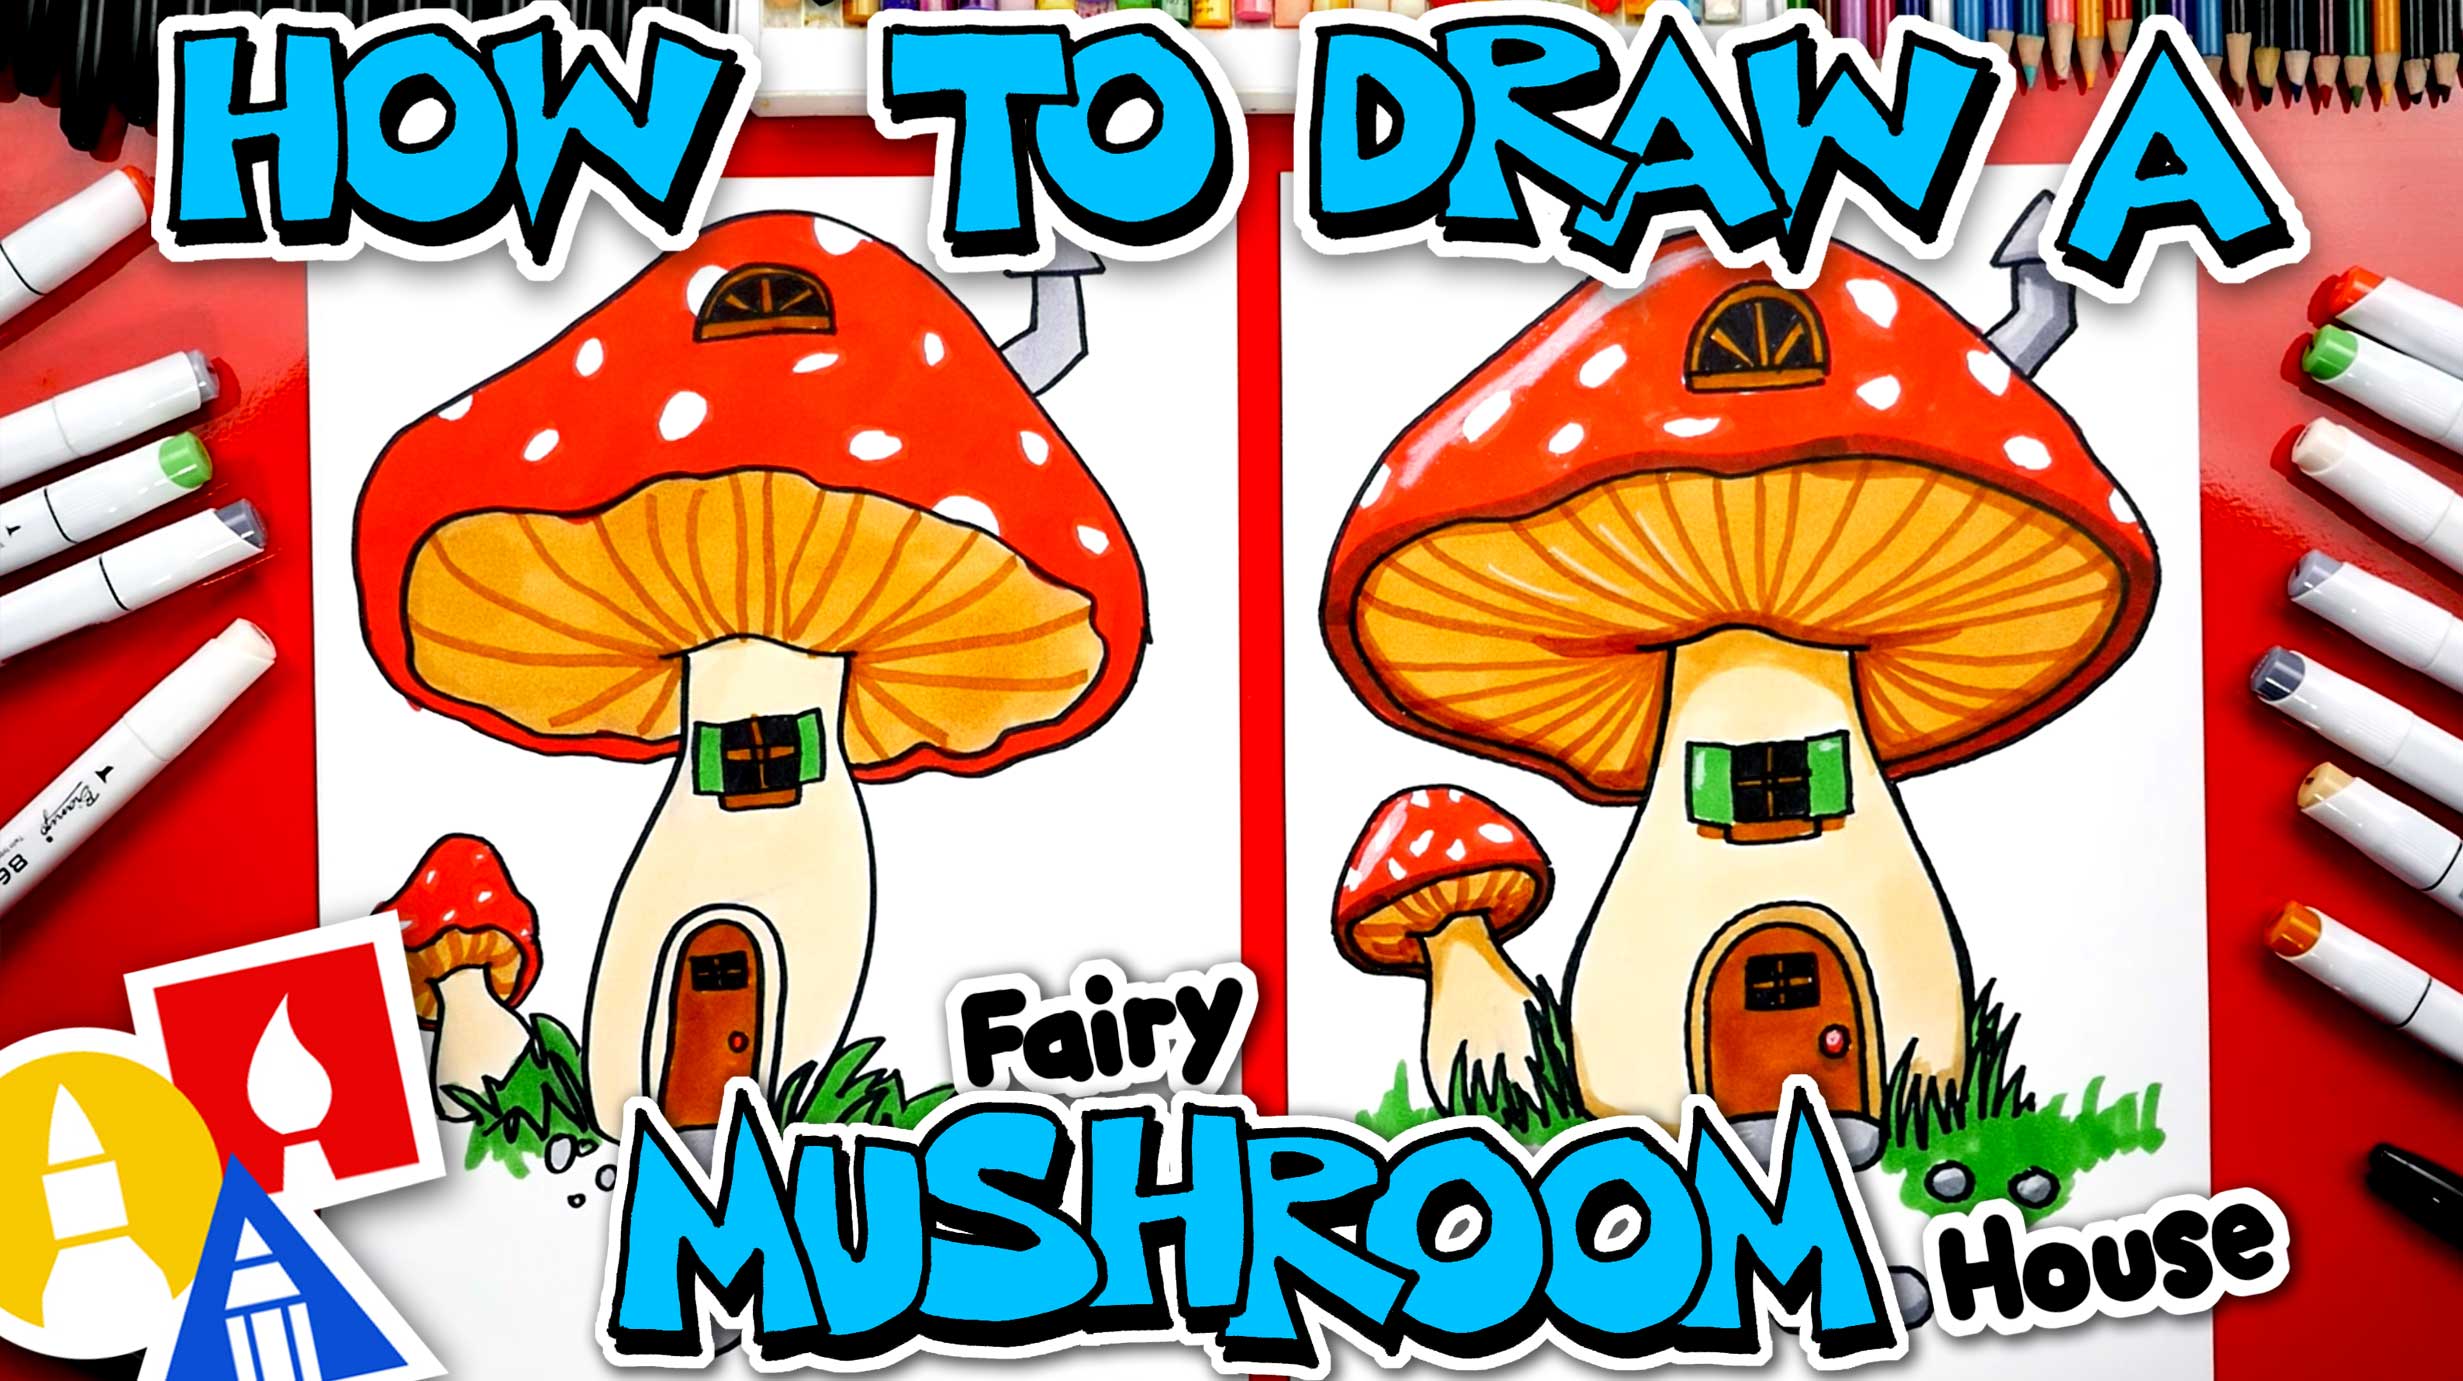 How To Draw A Fairy Mushroom House Art For Kids Hub